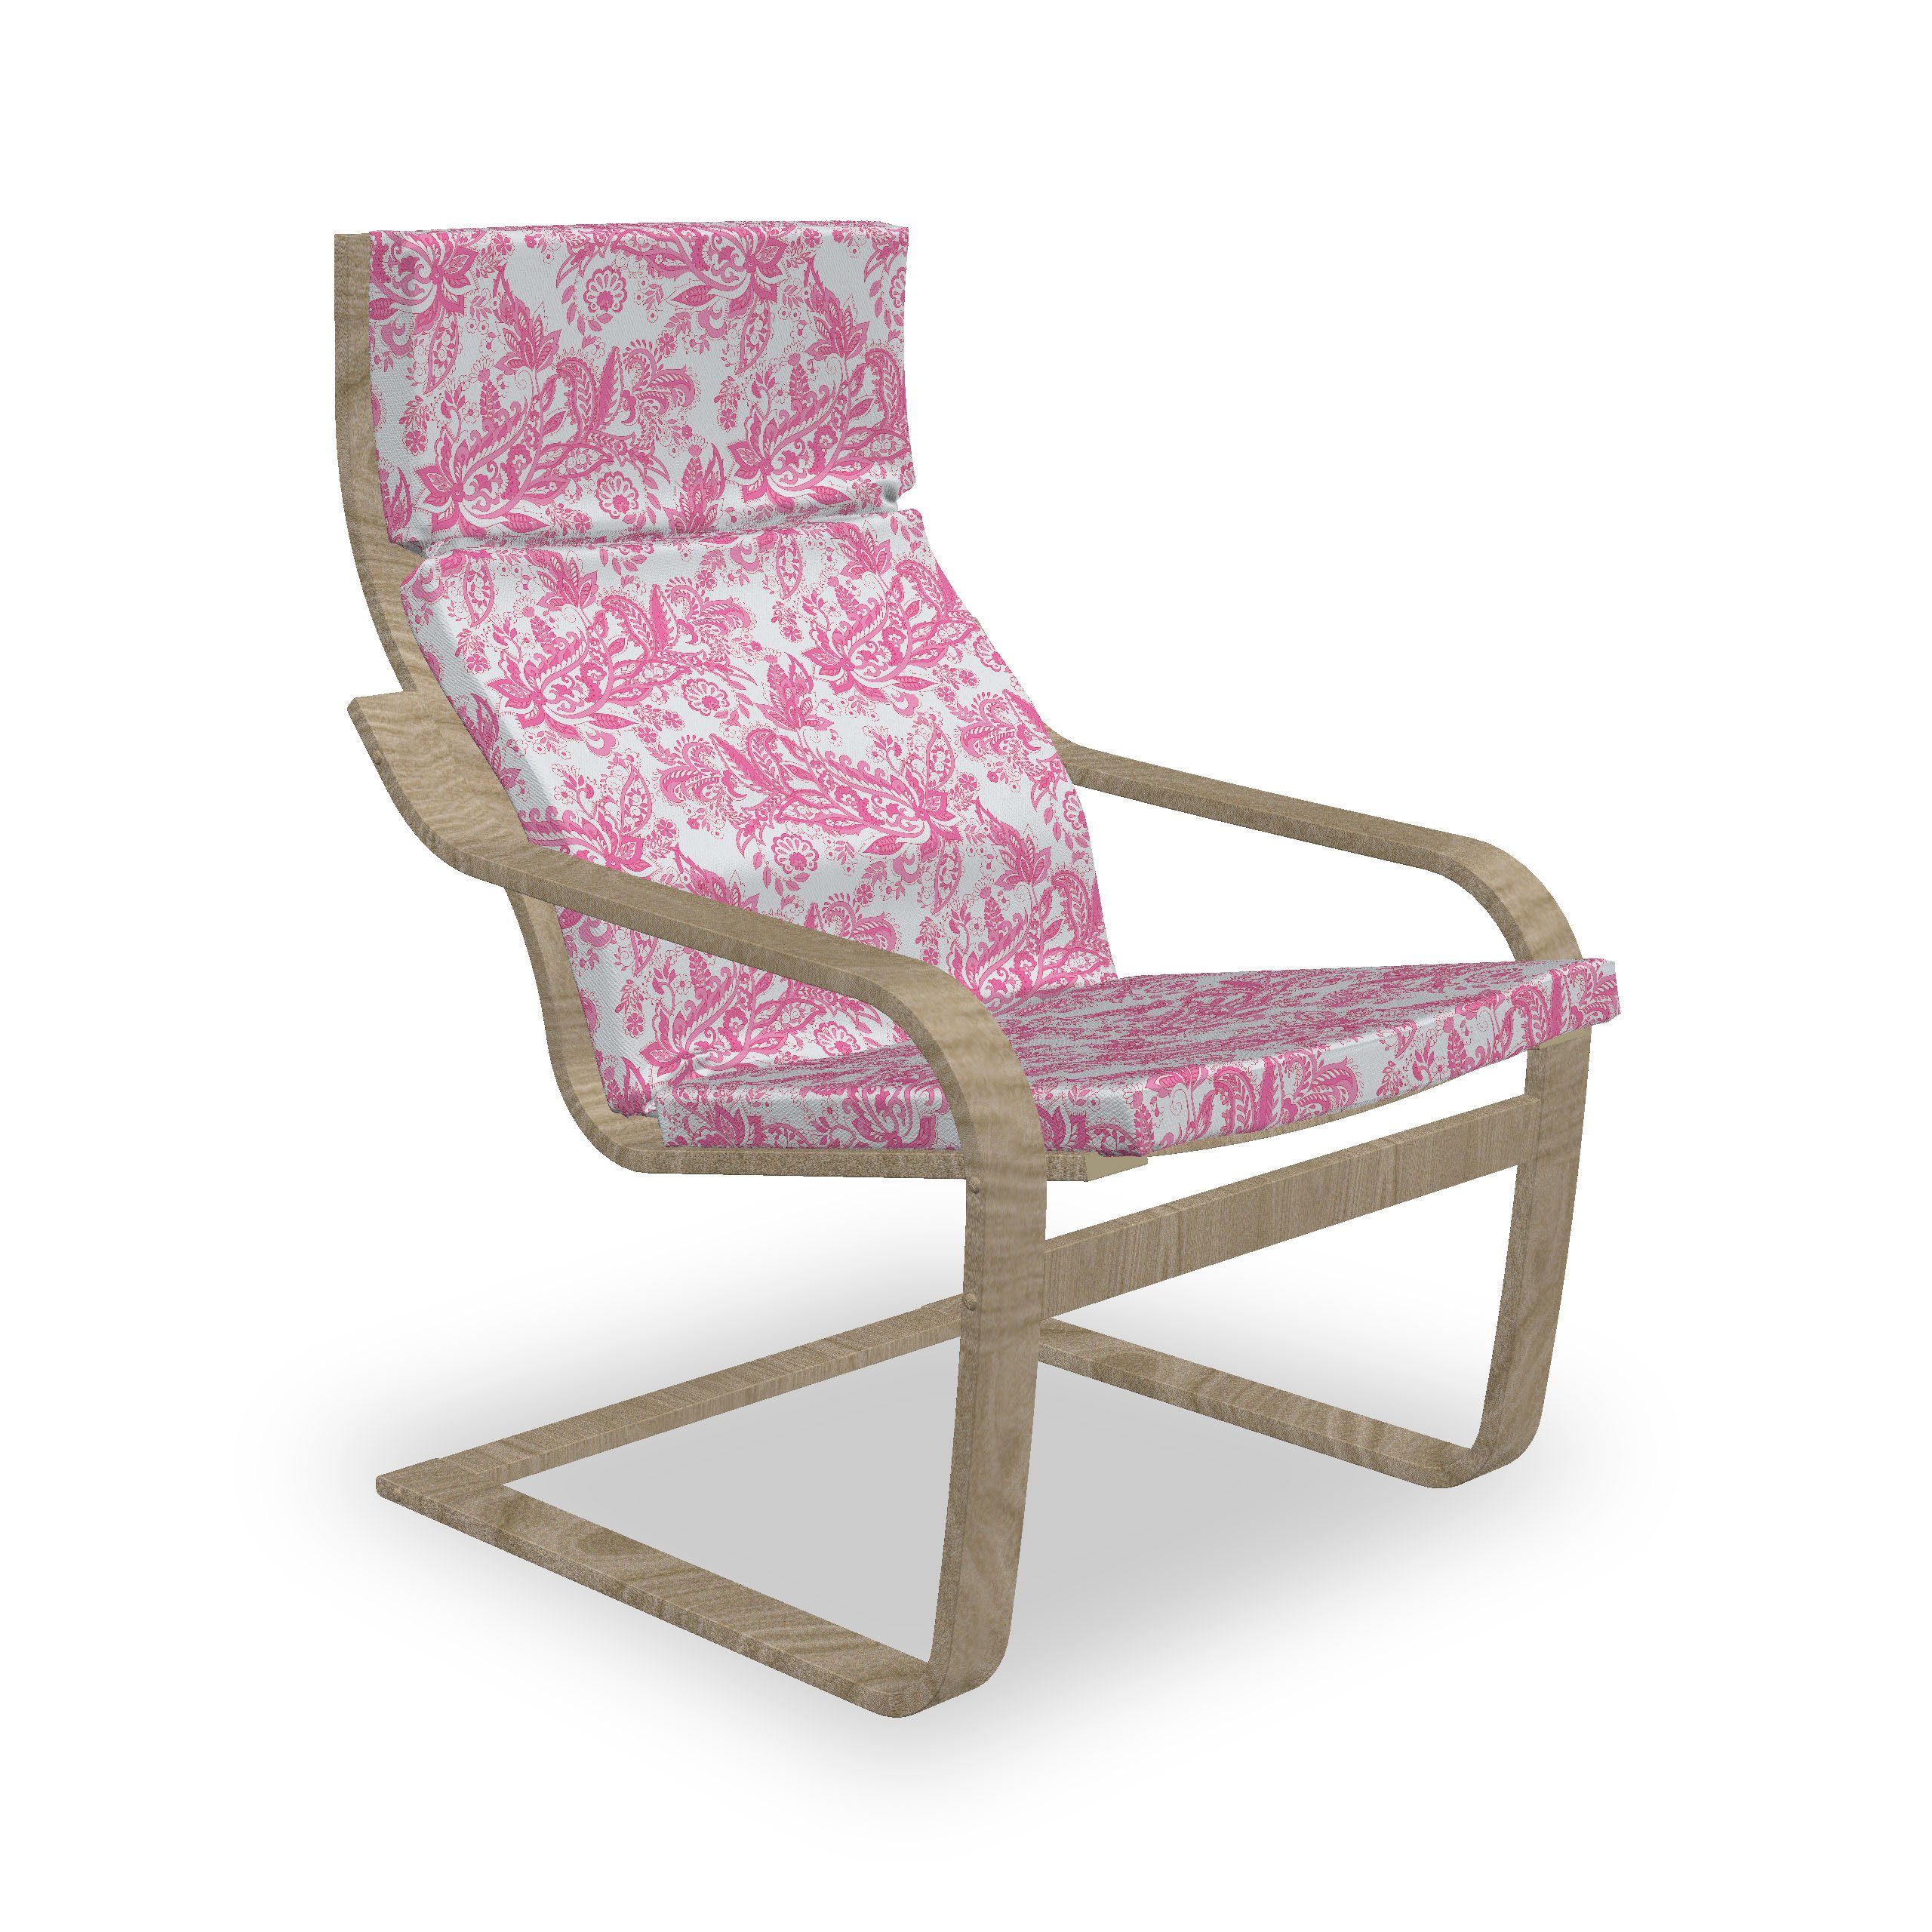 Abakuhaus Stuhlkissen Sitzkissen mit Stuhlkissen mit Hakenschlaufe und Reißverschluss, Blumen Pinkish Paisley-Muster